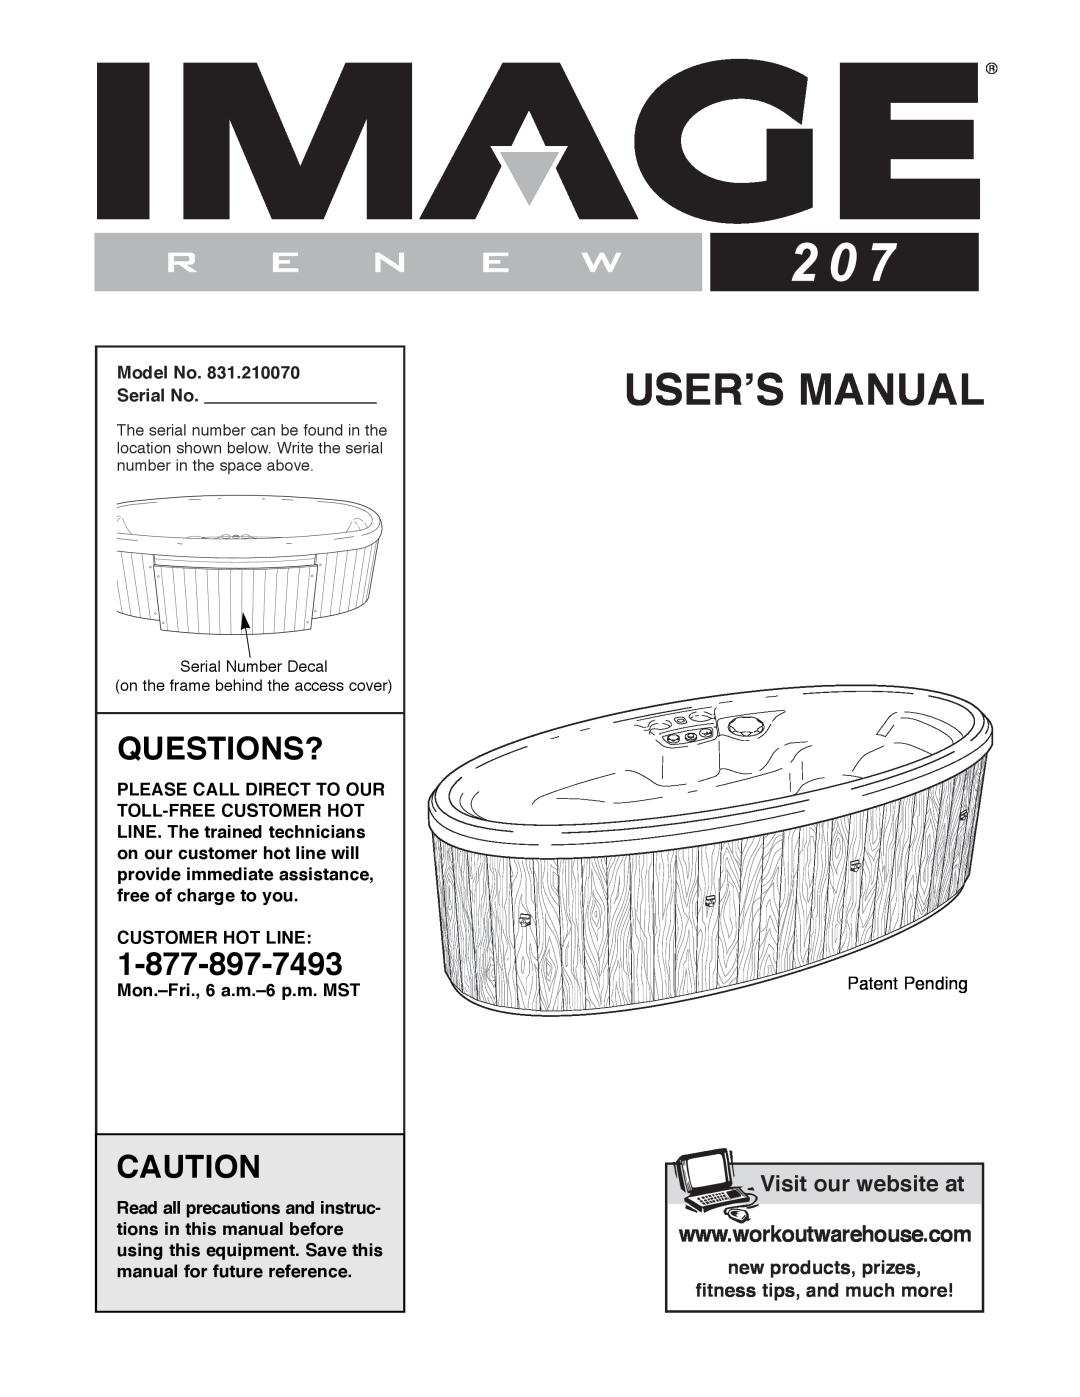 Image 831.21007 manual Questions?, Model No Serial No, Customer Hot Line, Mon.ÐFri., 6 a.m.Ð6 p.m. MST, Userõs Manual 